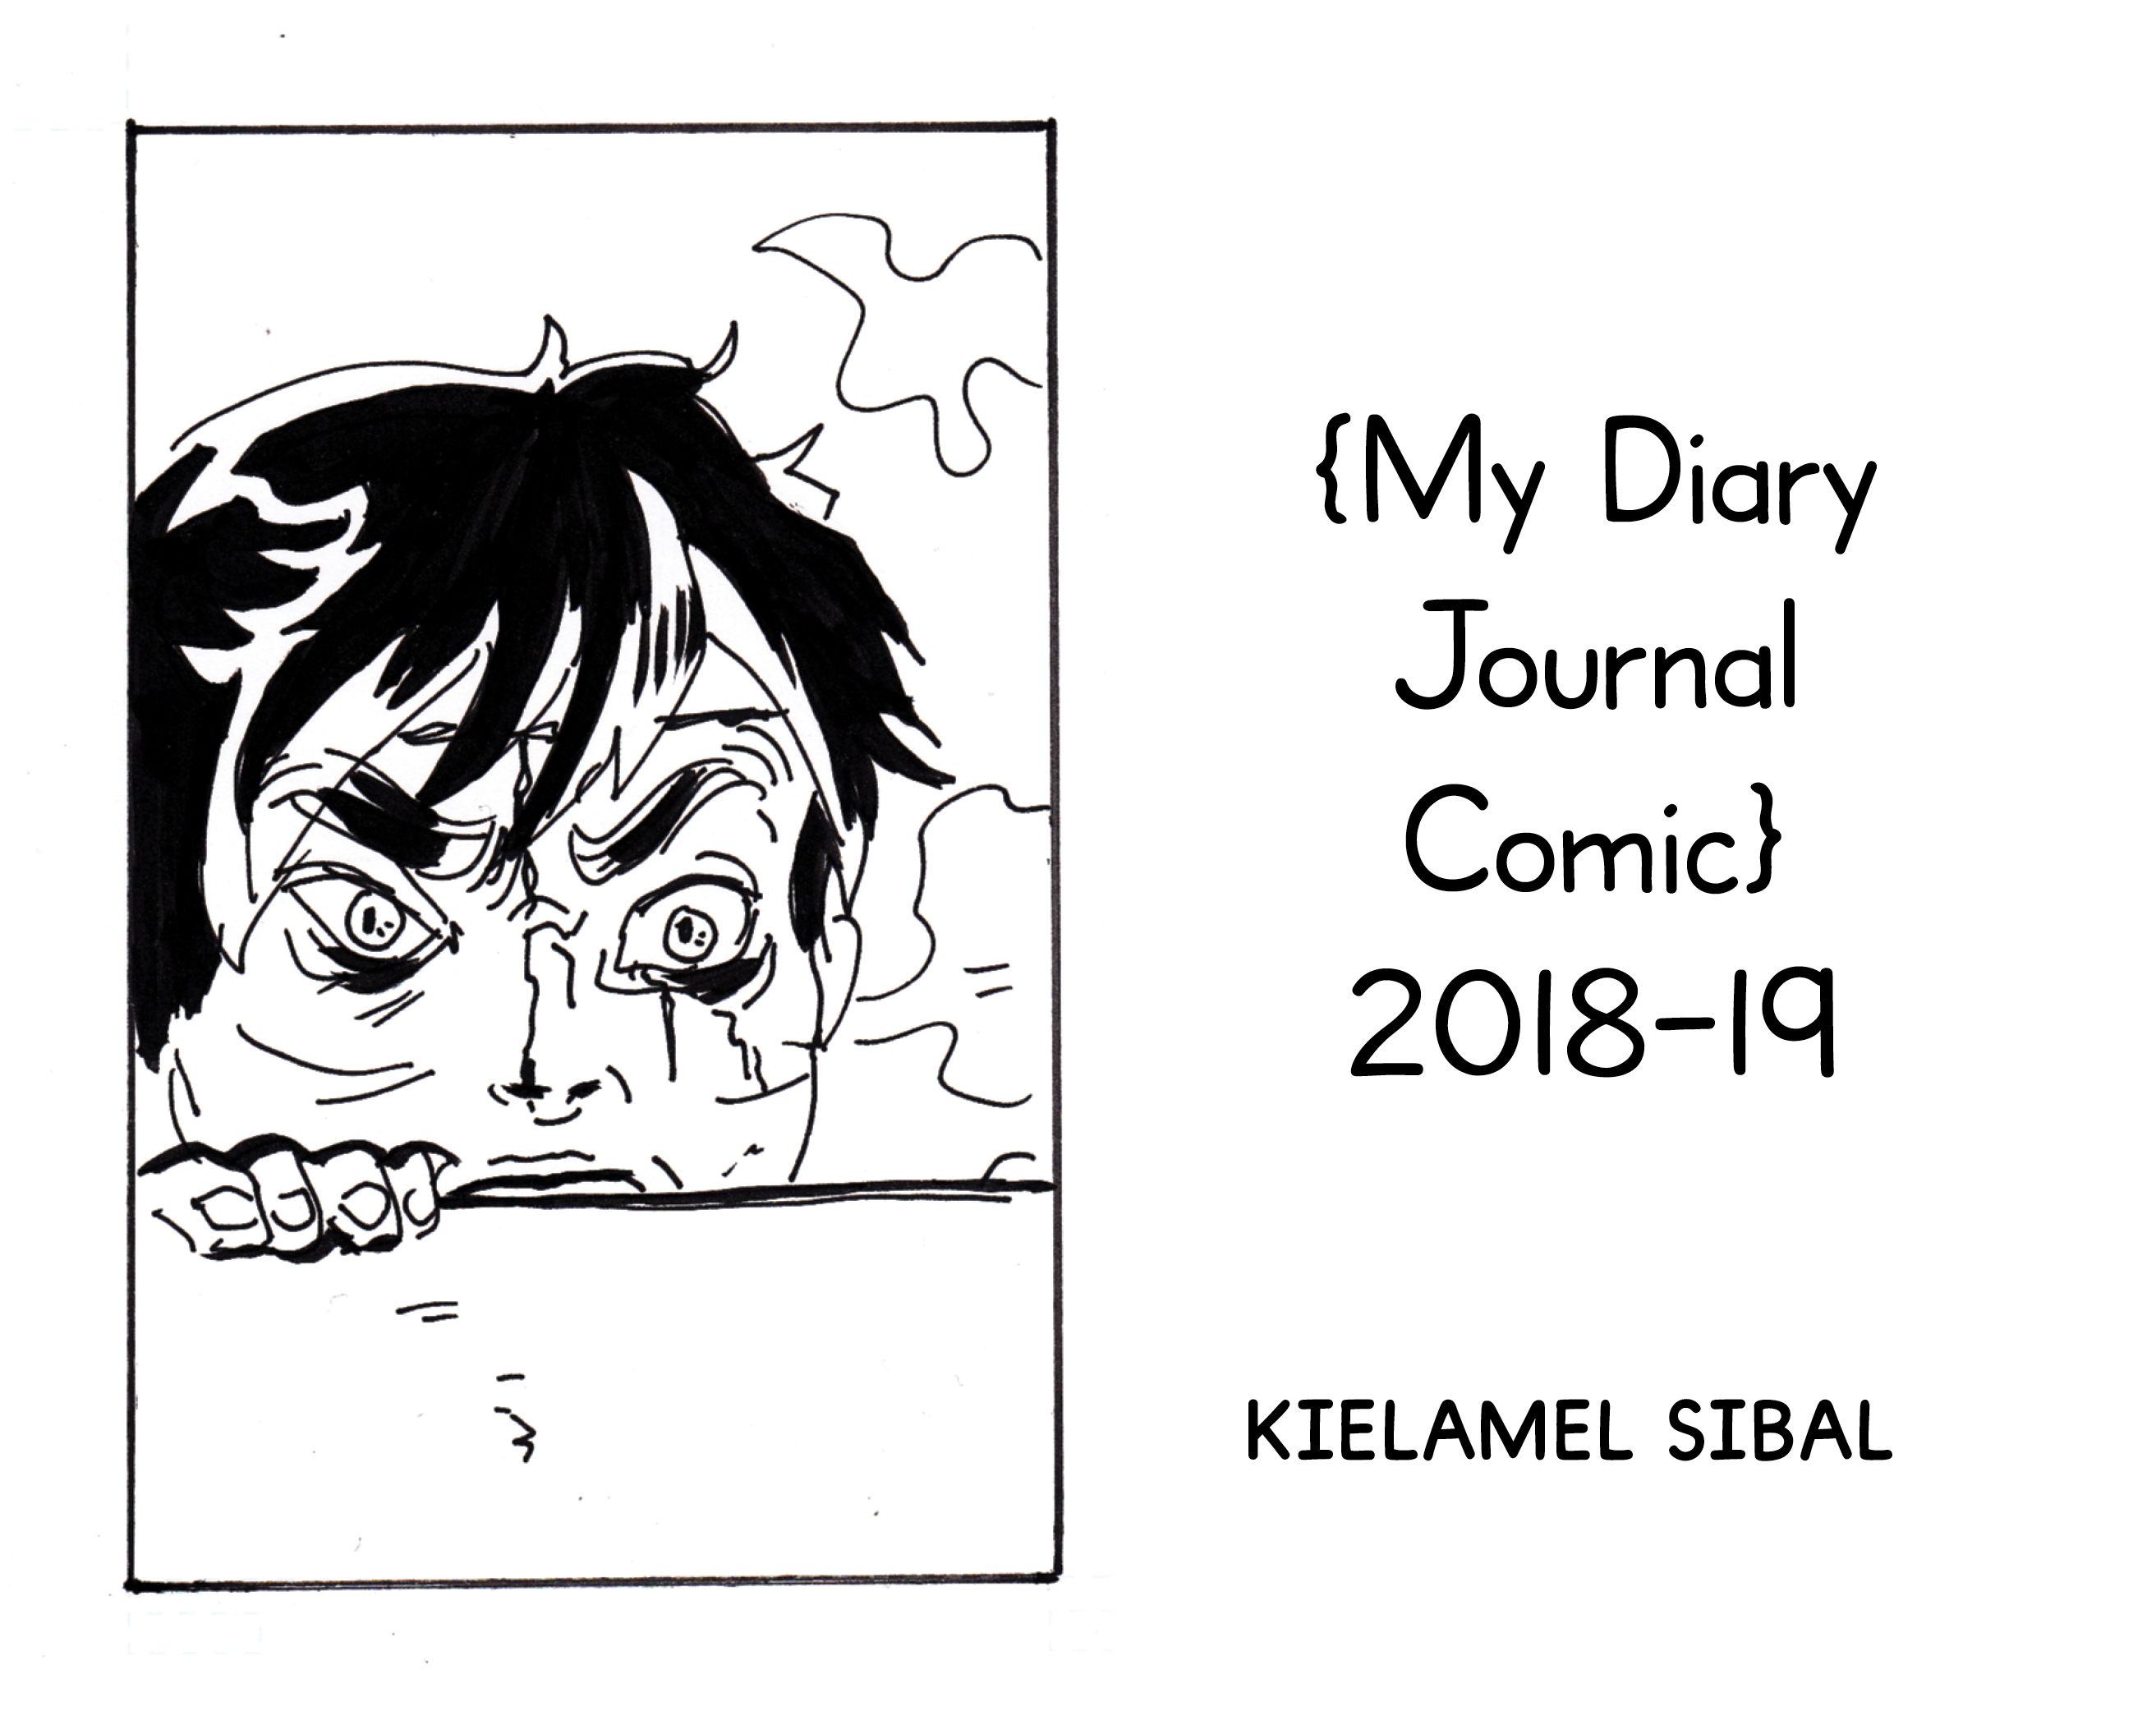 My Diary Journal Comic (2018-19) by Hypertuna